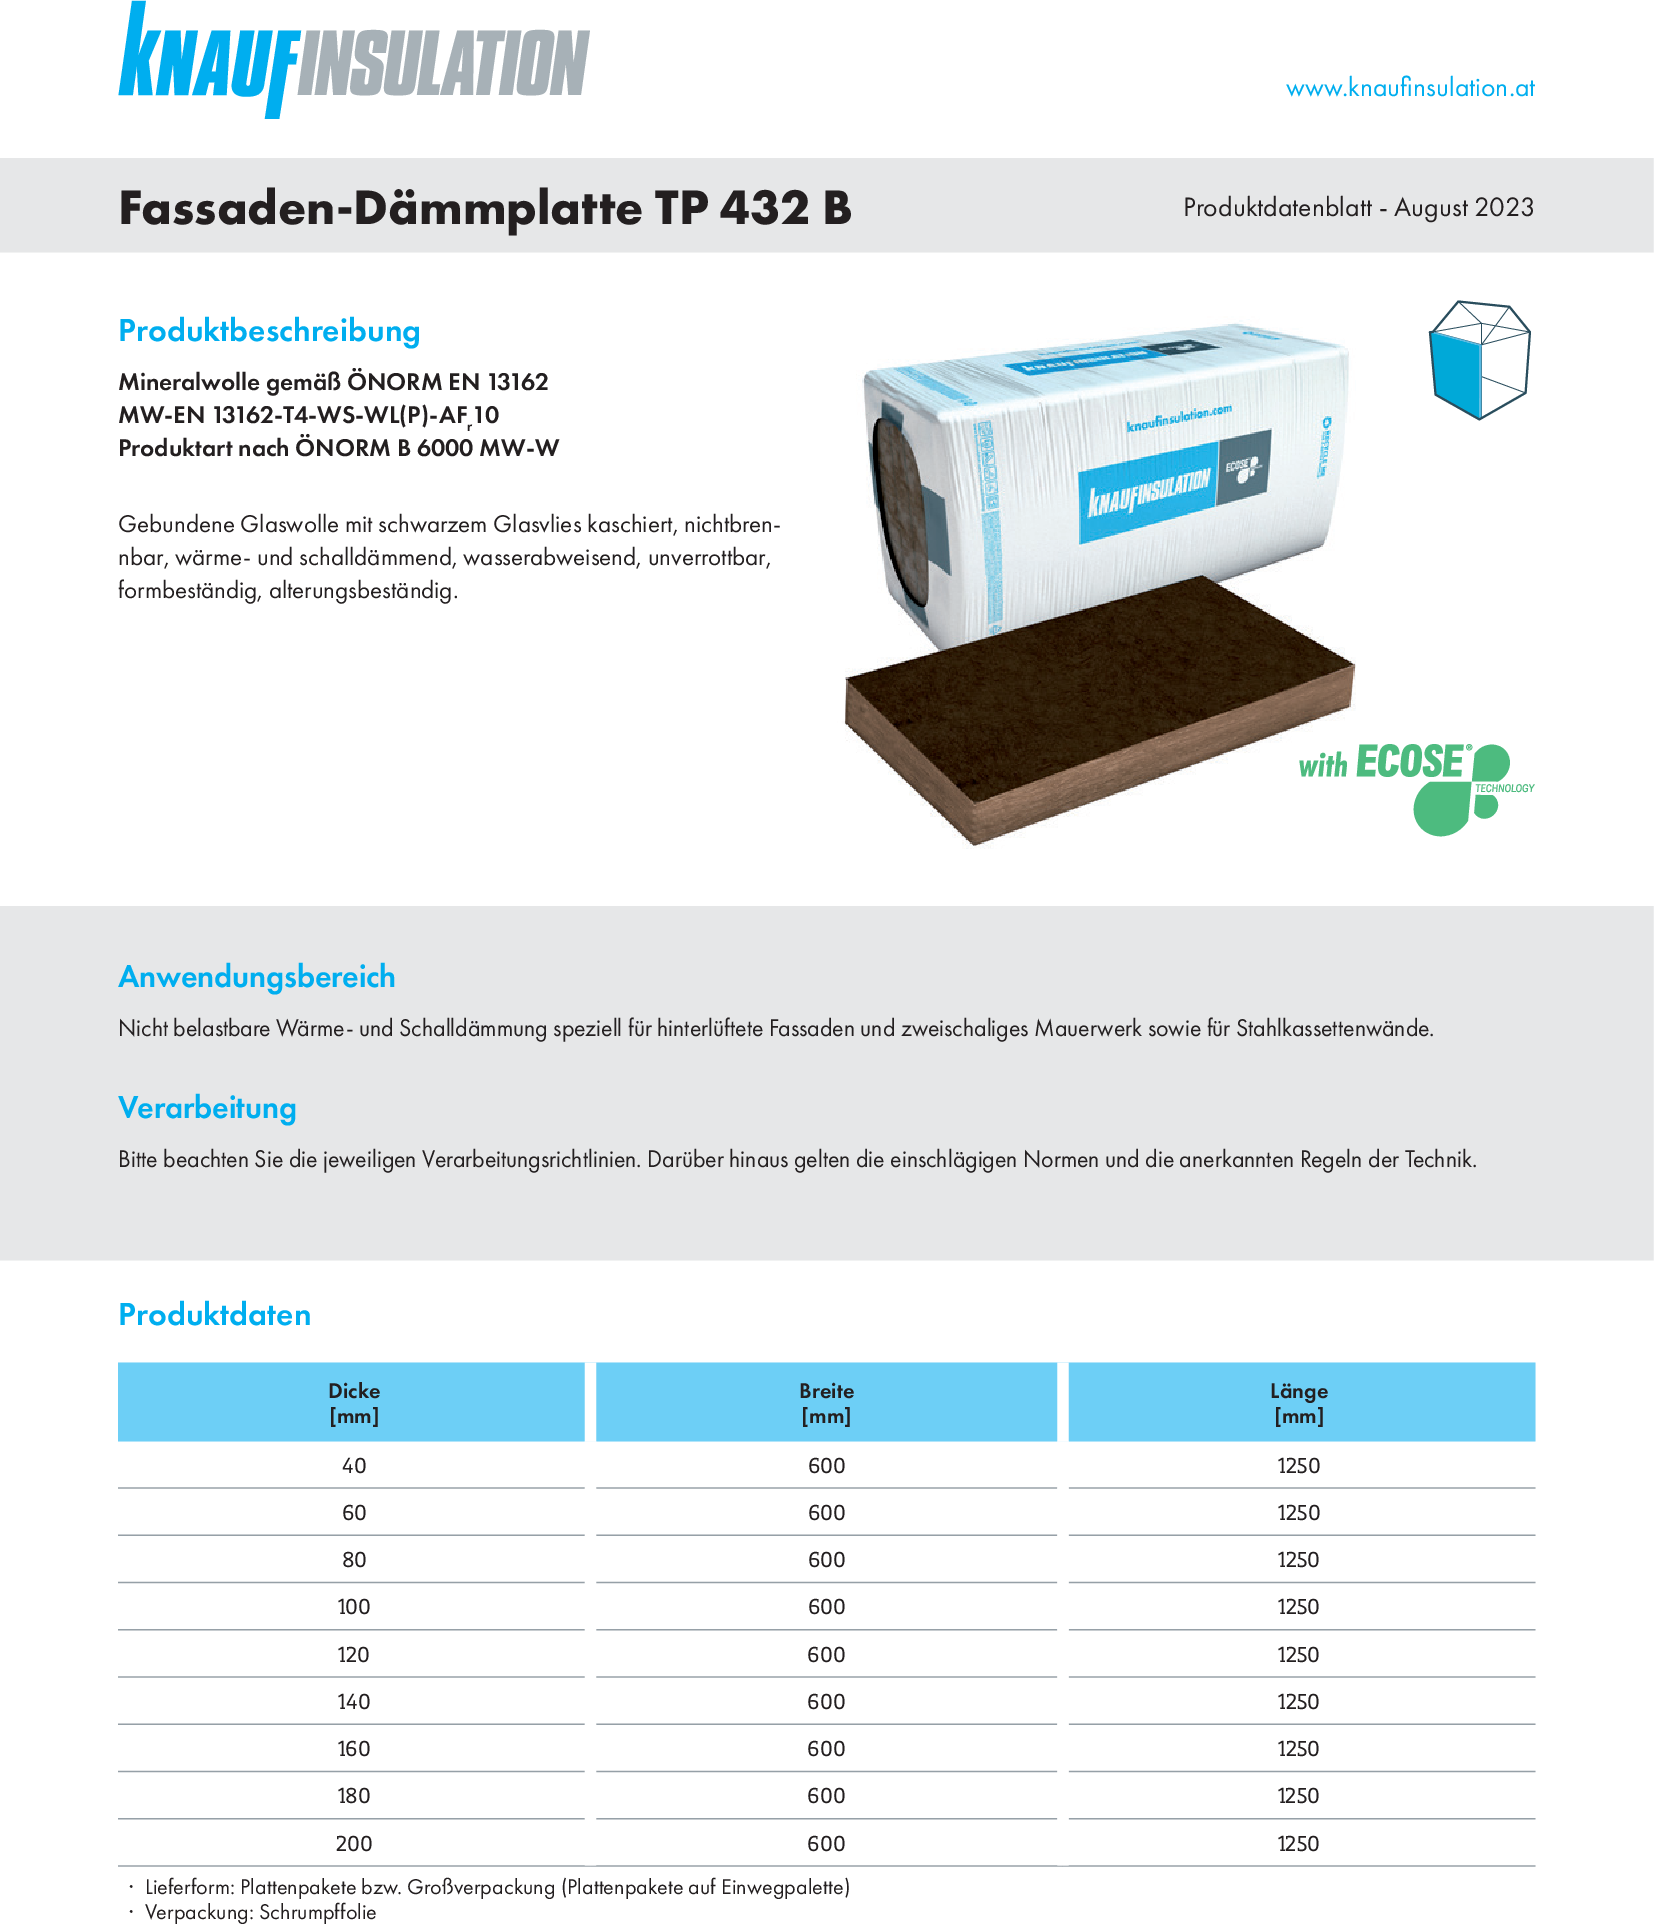 Fassaden-Dämmplatte TP 432 B, Produktdatenblatt